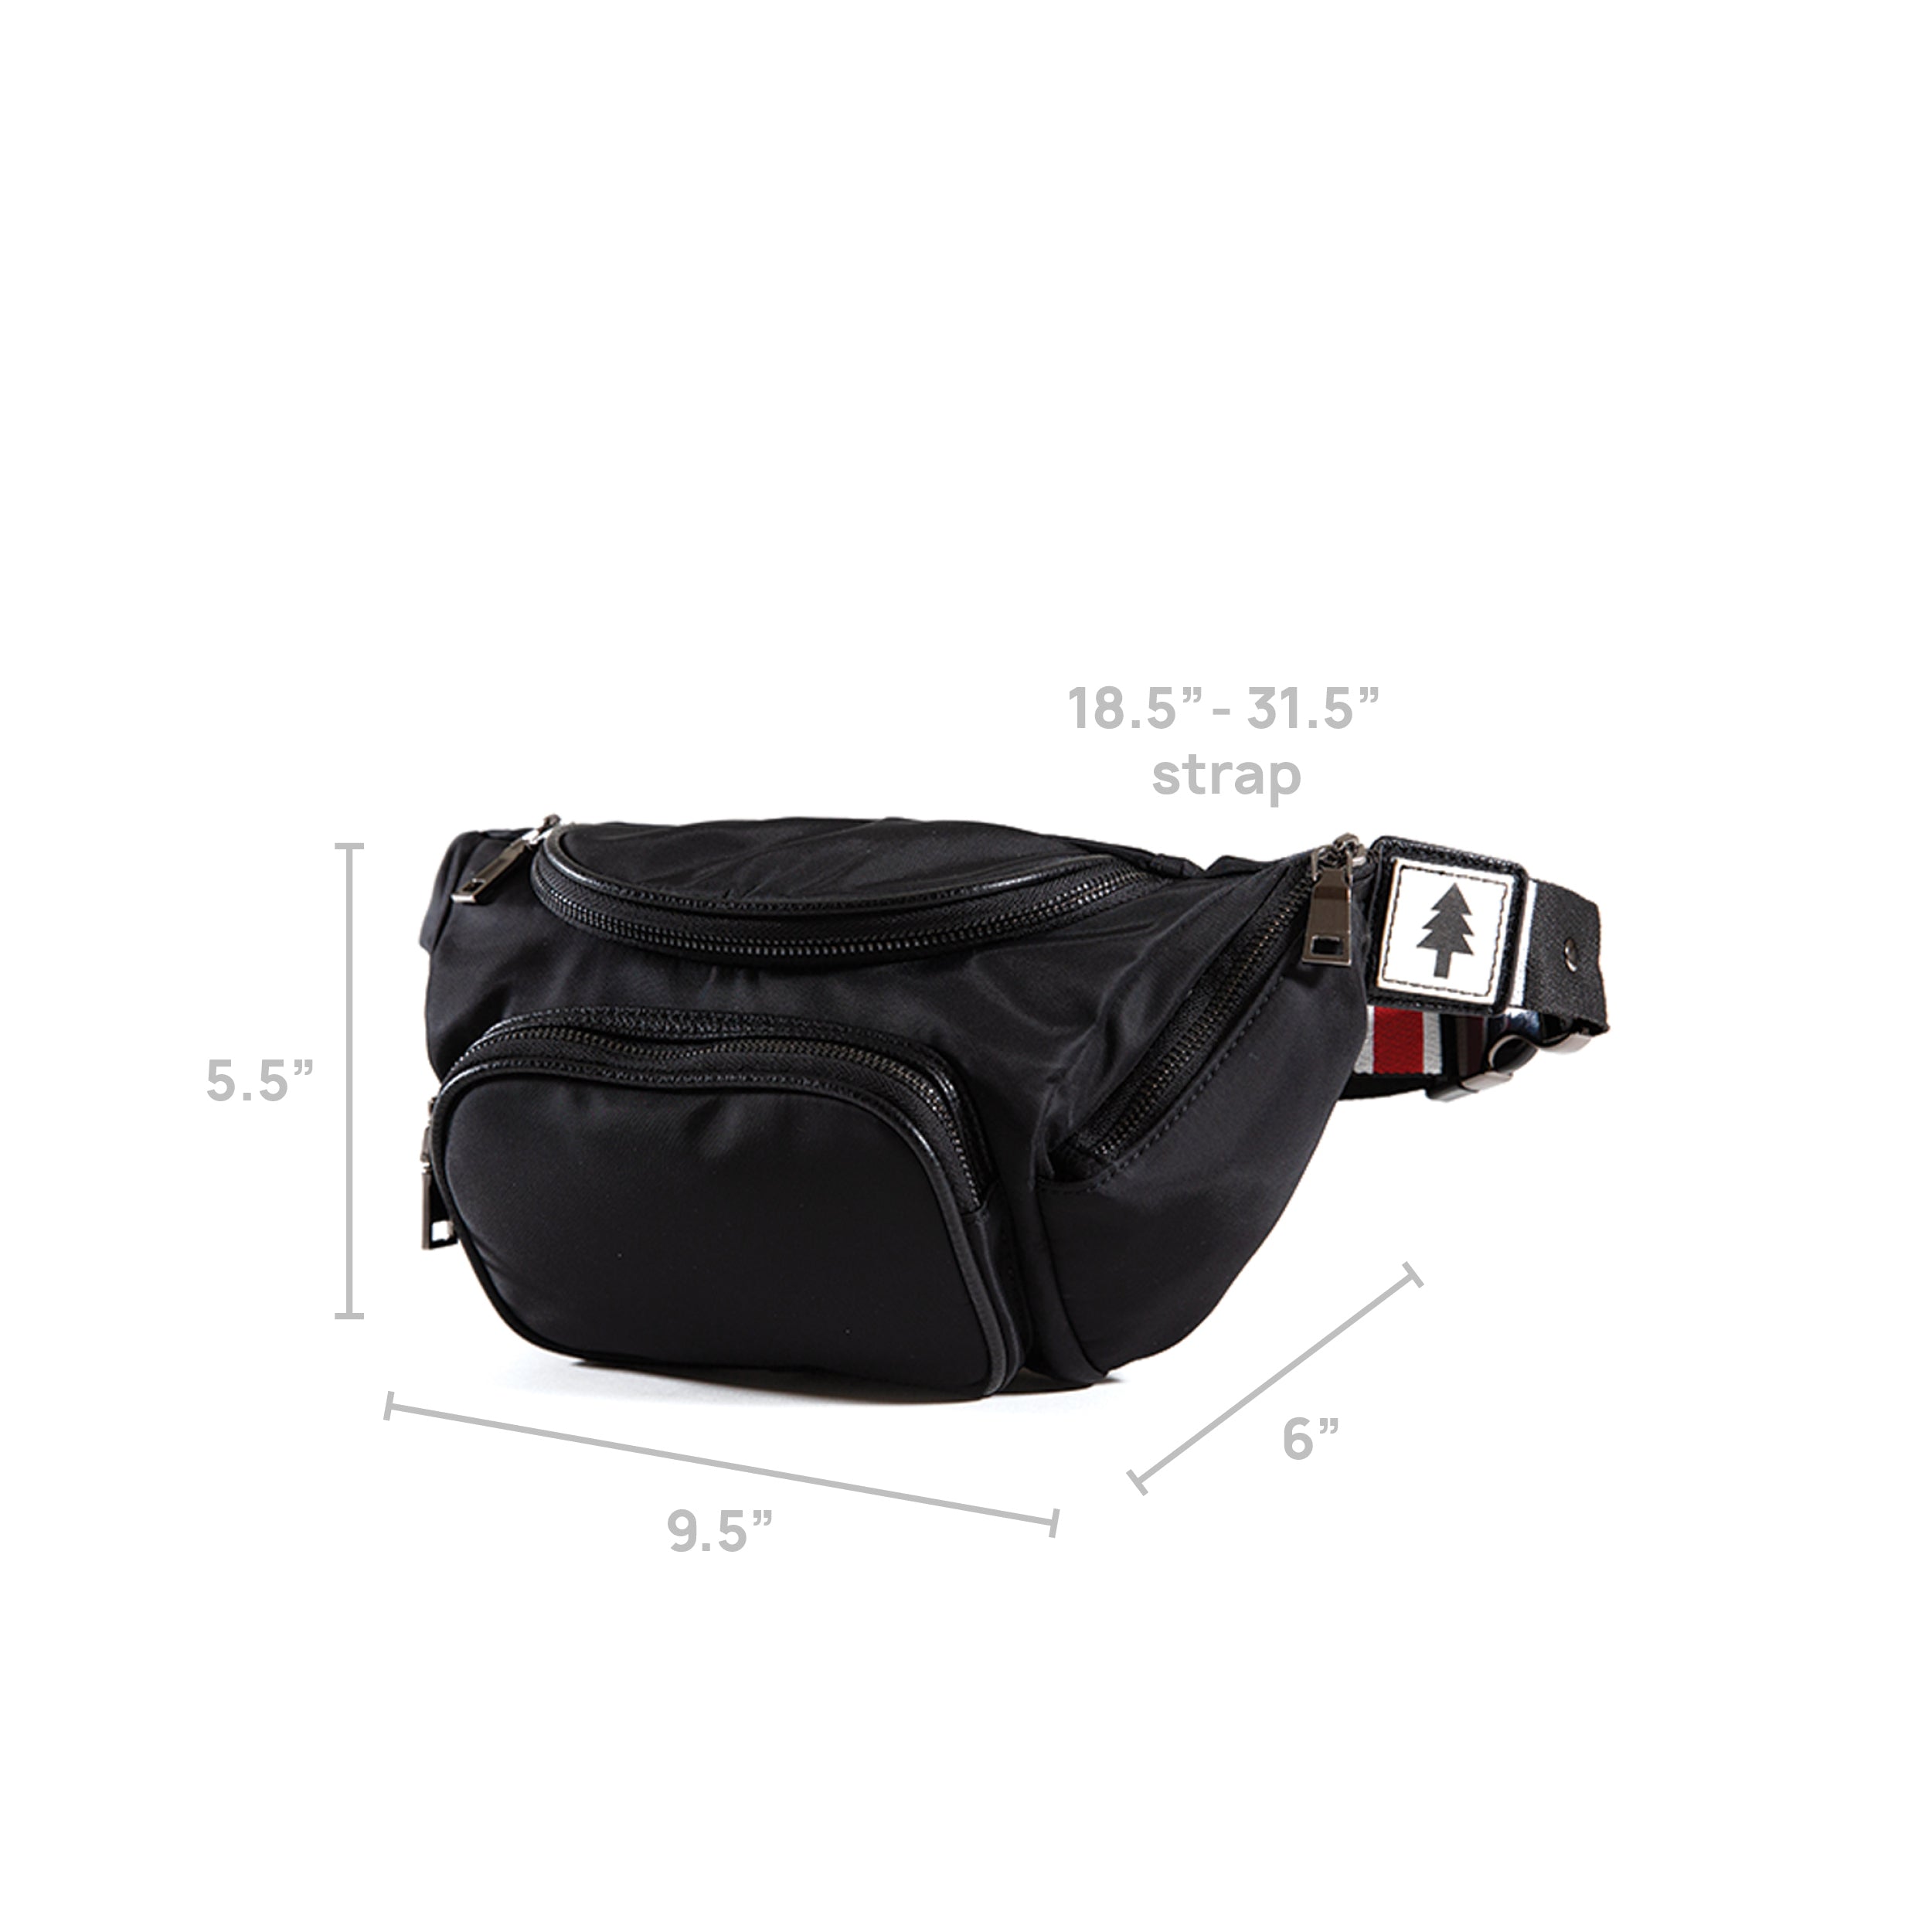 Black Leather Belly Bag Leather Fanny Pack Festival Bag for 